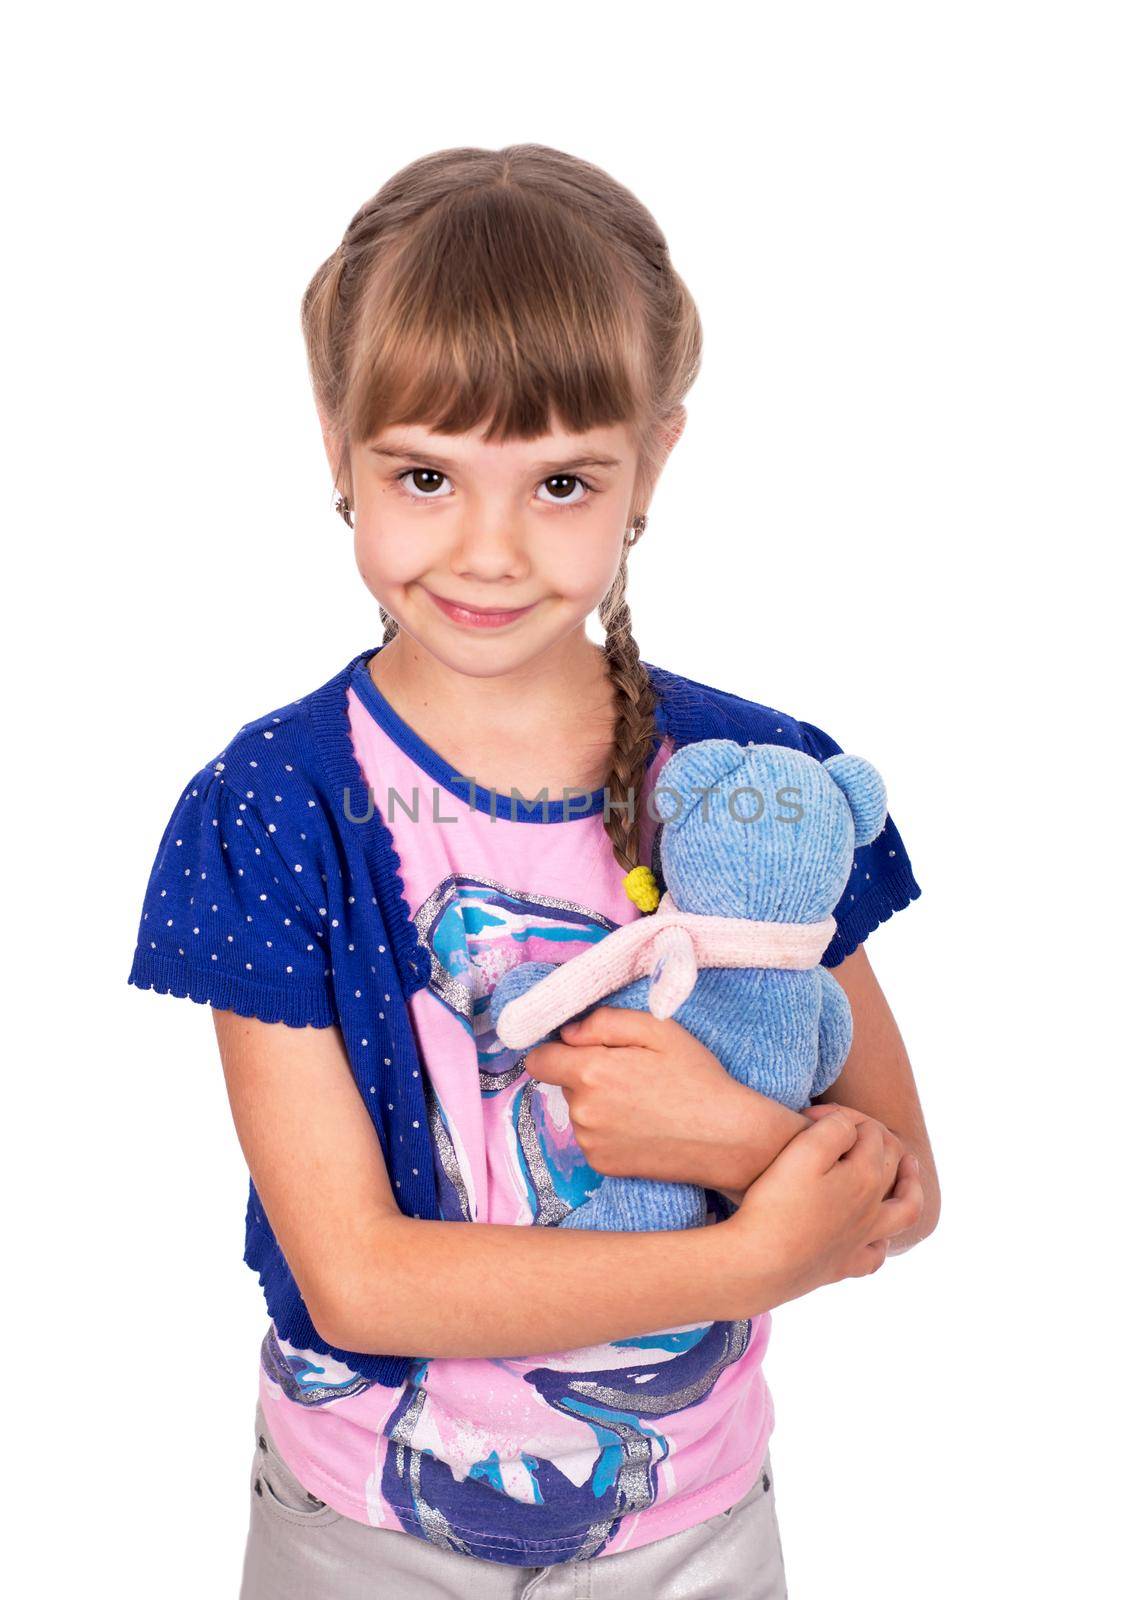 Little girl holding a teddy bear. Isolated on white background. Girl hugging two teddybears.